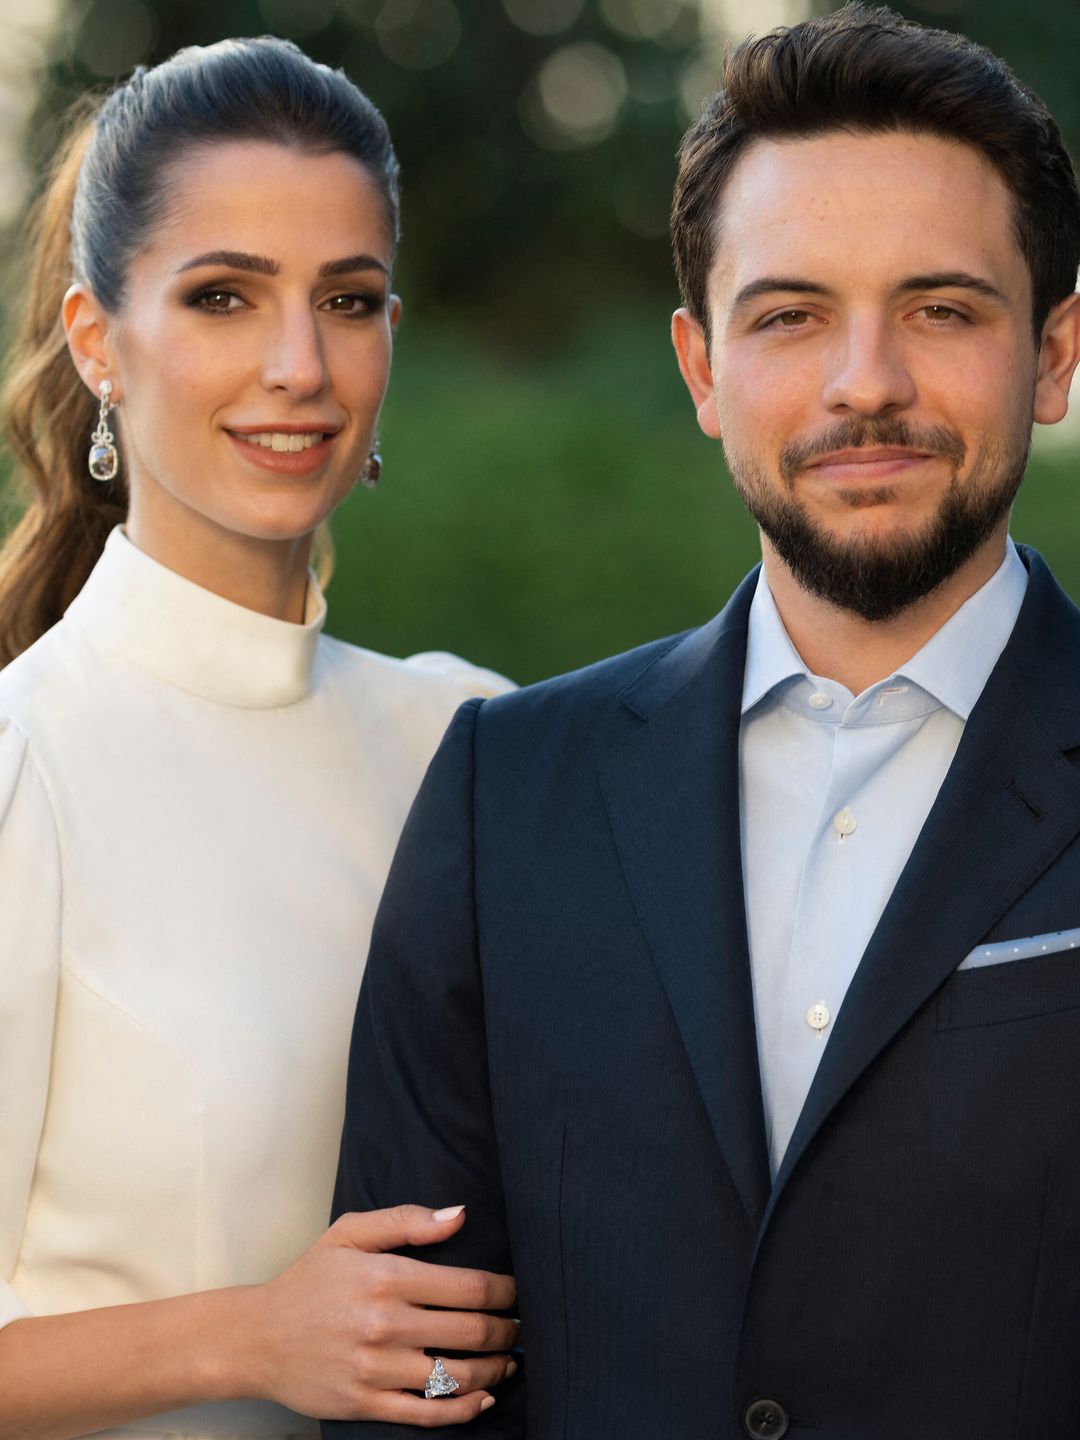 Jordan's Crown Prince Hussein in a suit with his fiancee Rajwa Al Saif wearing a white dress